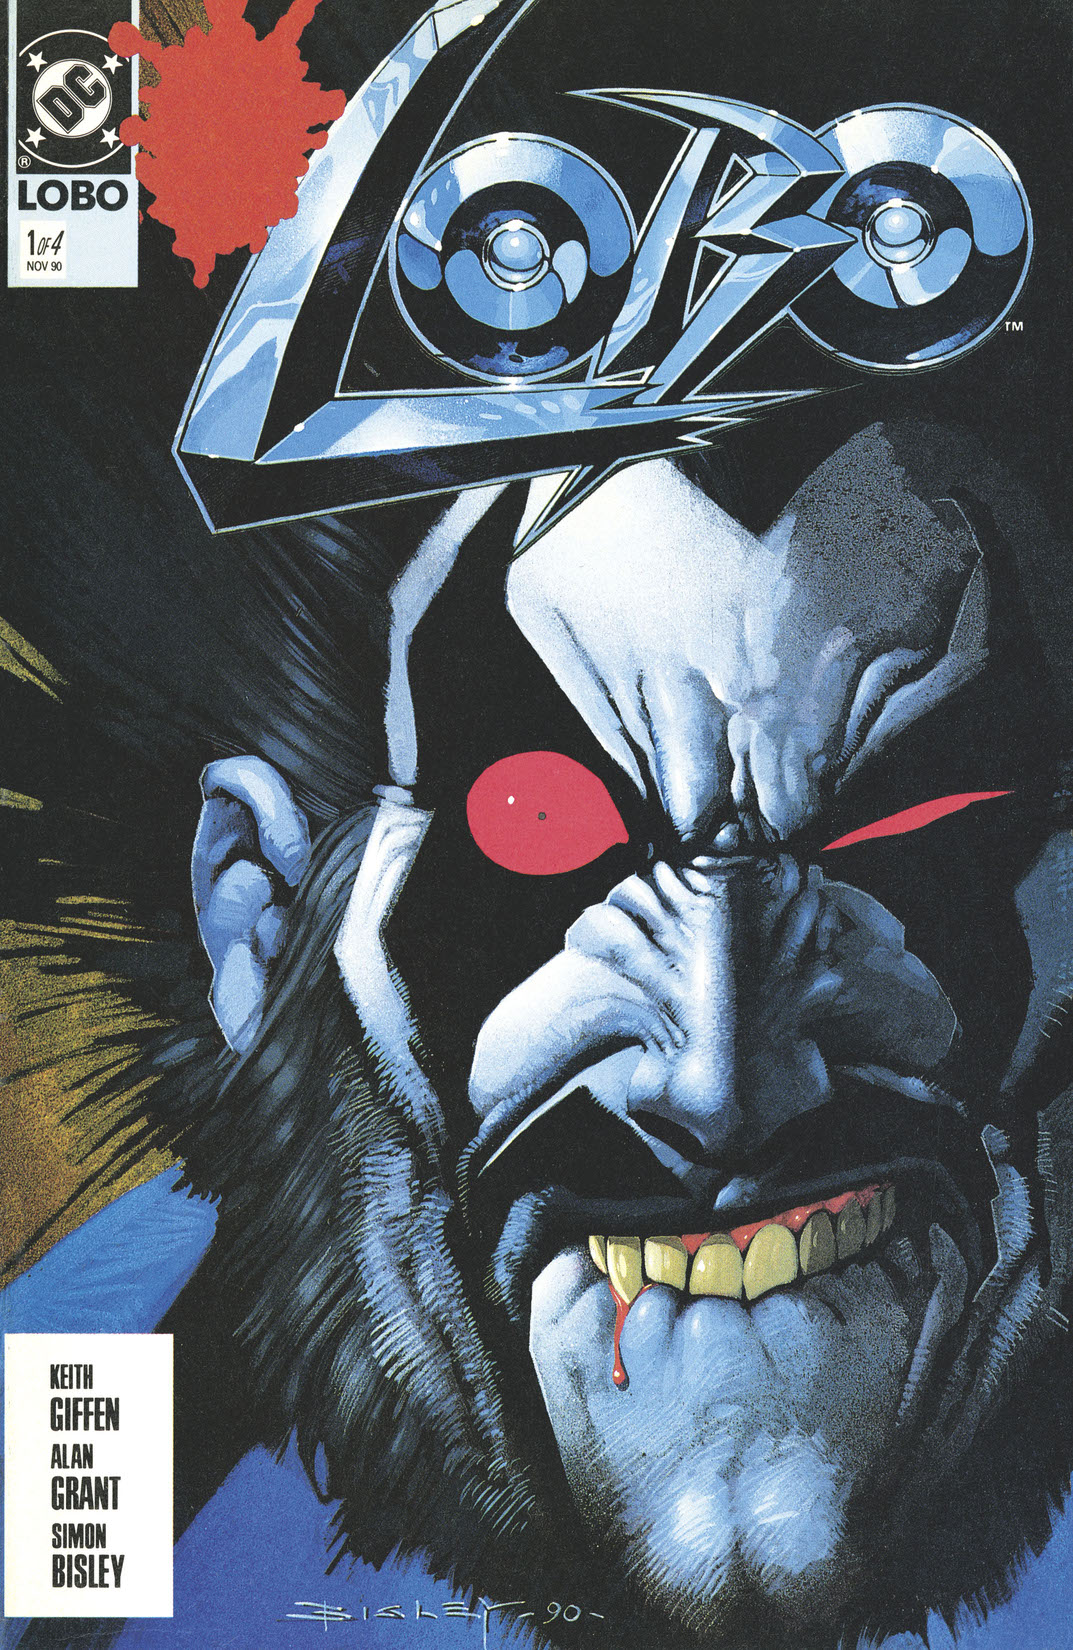 Lobo Mini-Series (1990-) #1 preview images